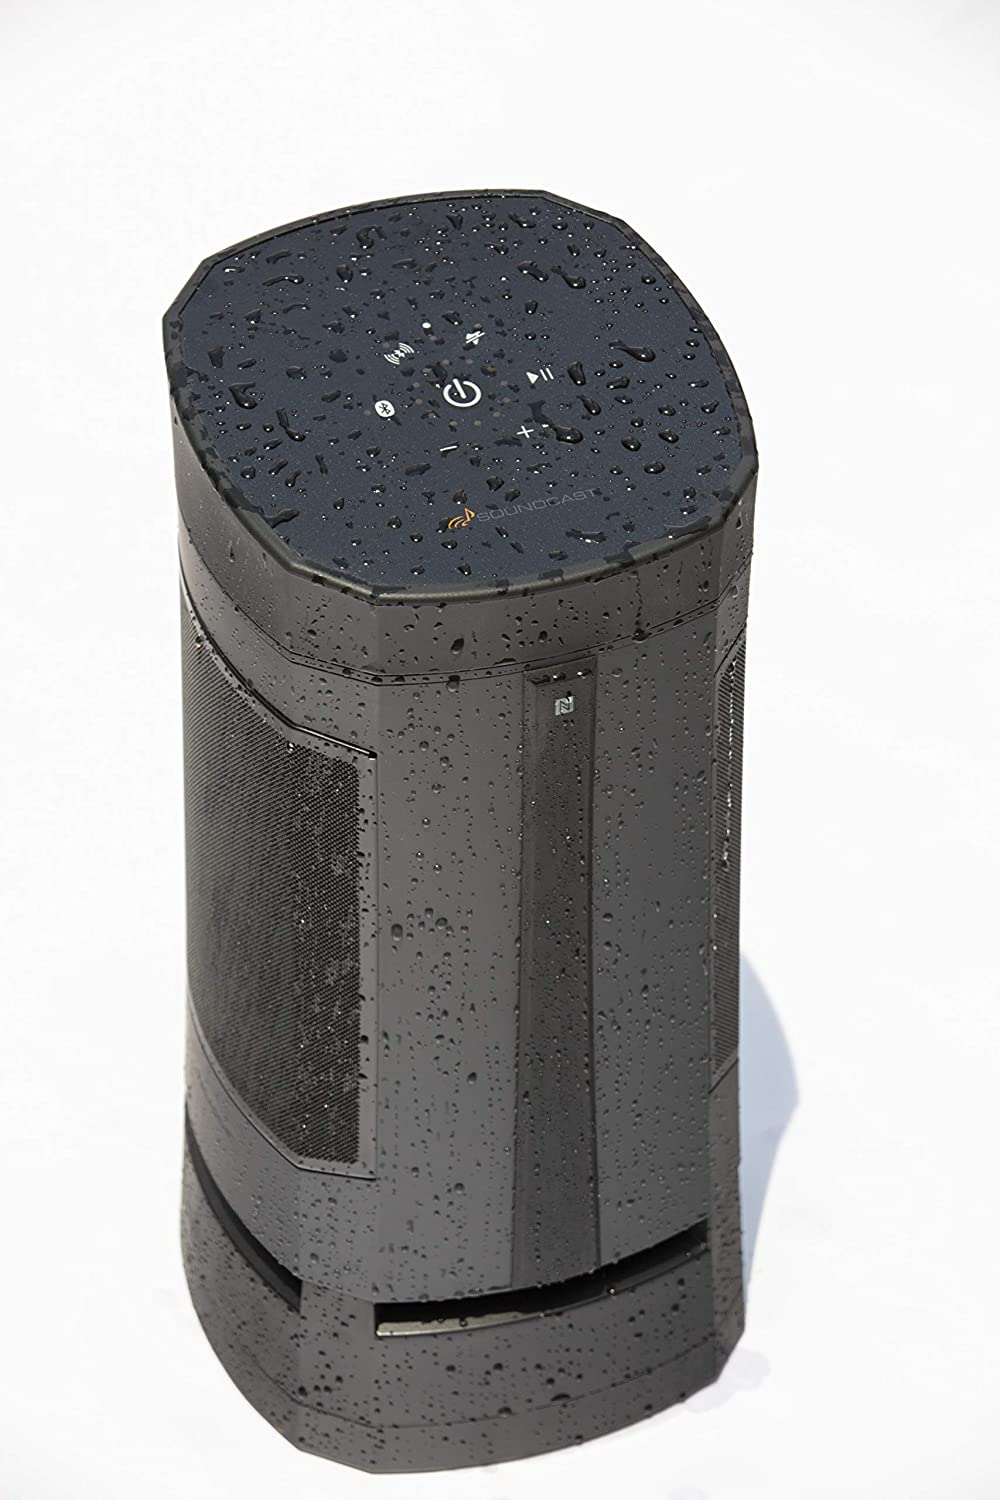 Soundcast VG5 Portable Weather-Resistant Bluetooth Loudspeaker, Black